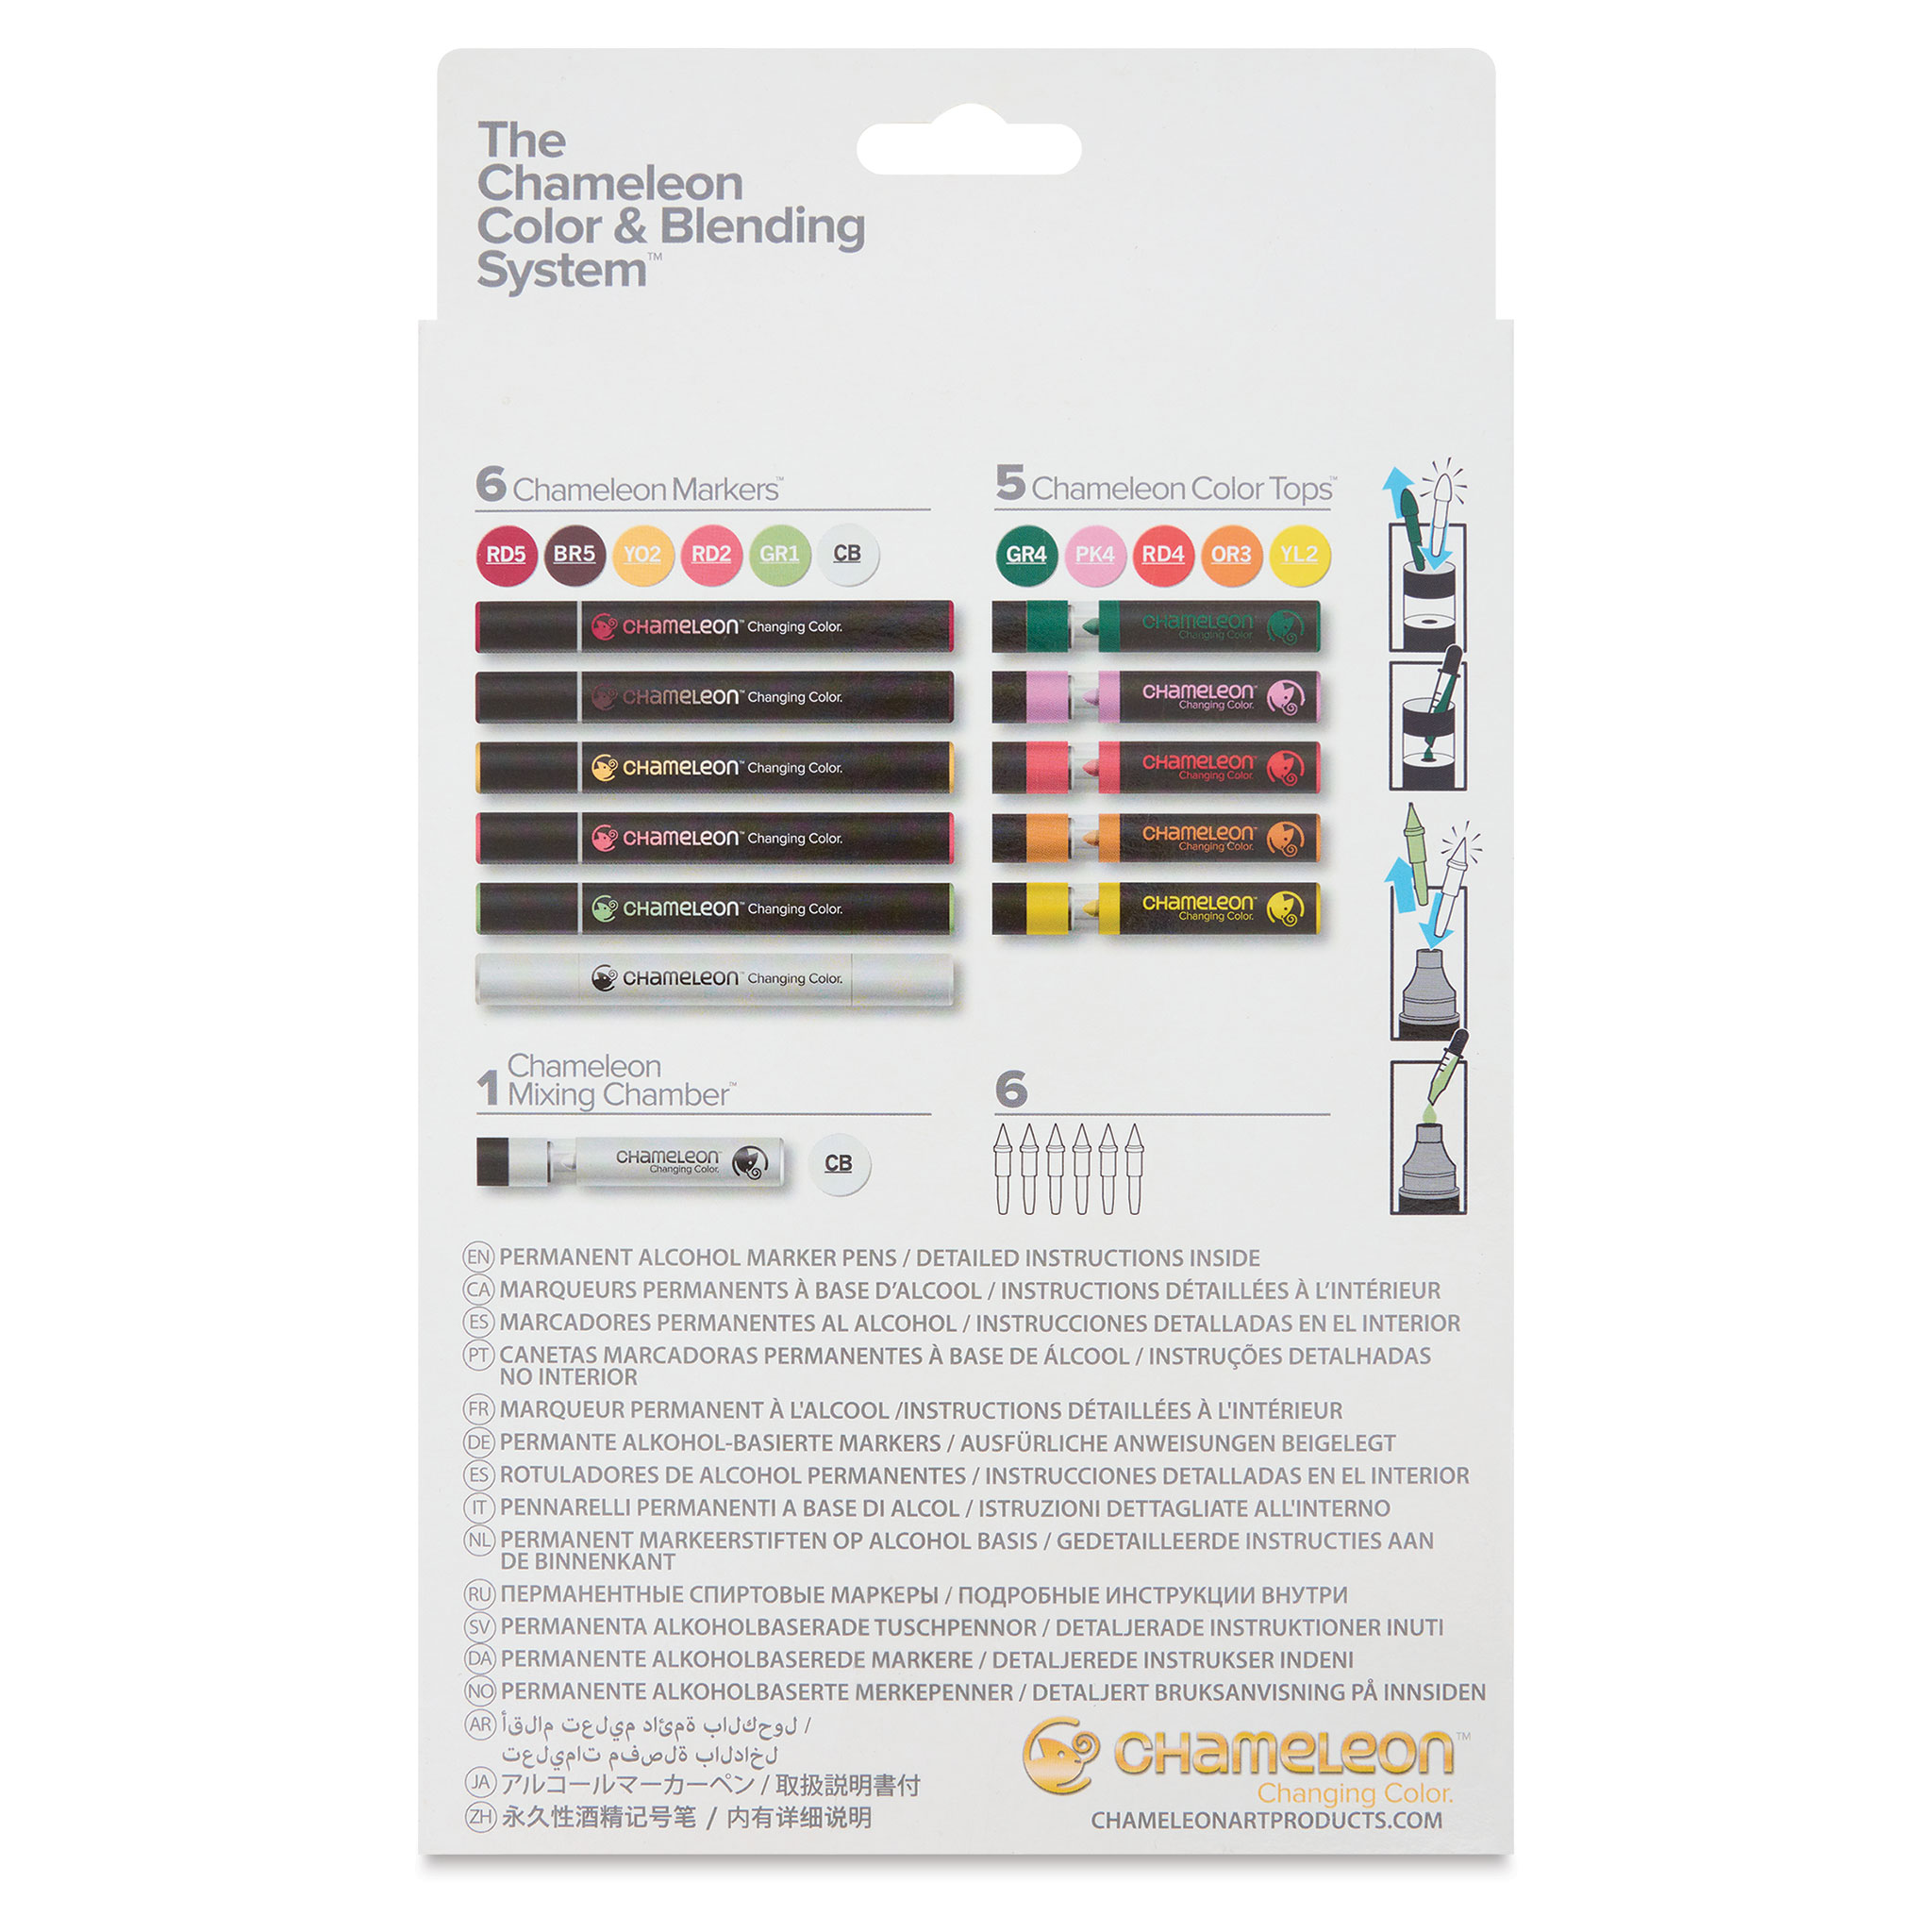 Chameleon Colour Blending System Pen Sets